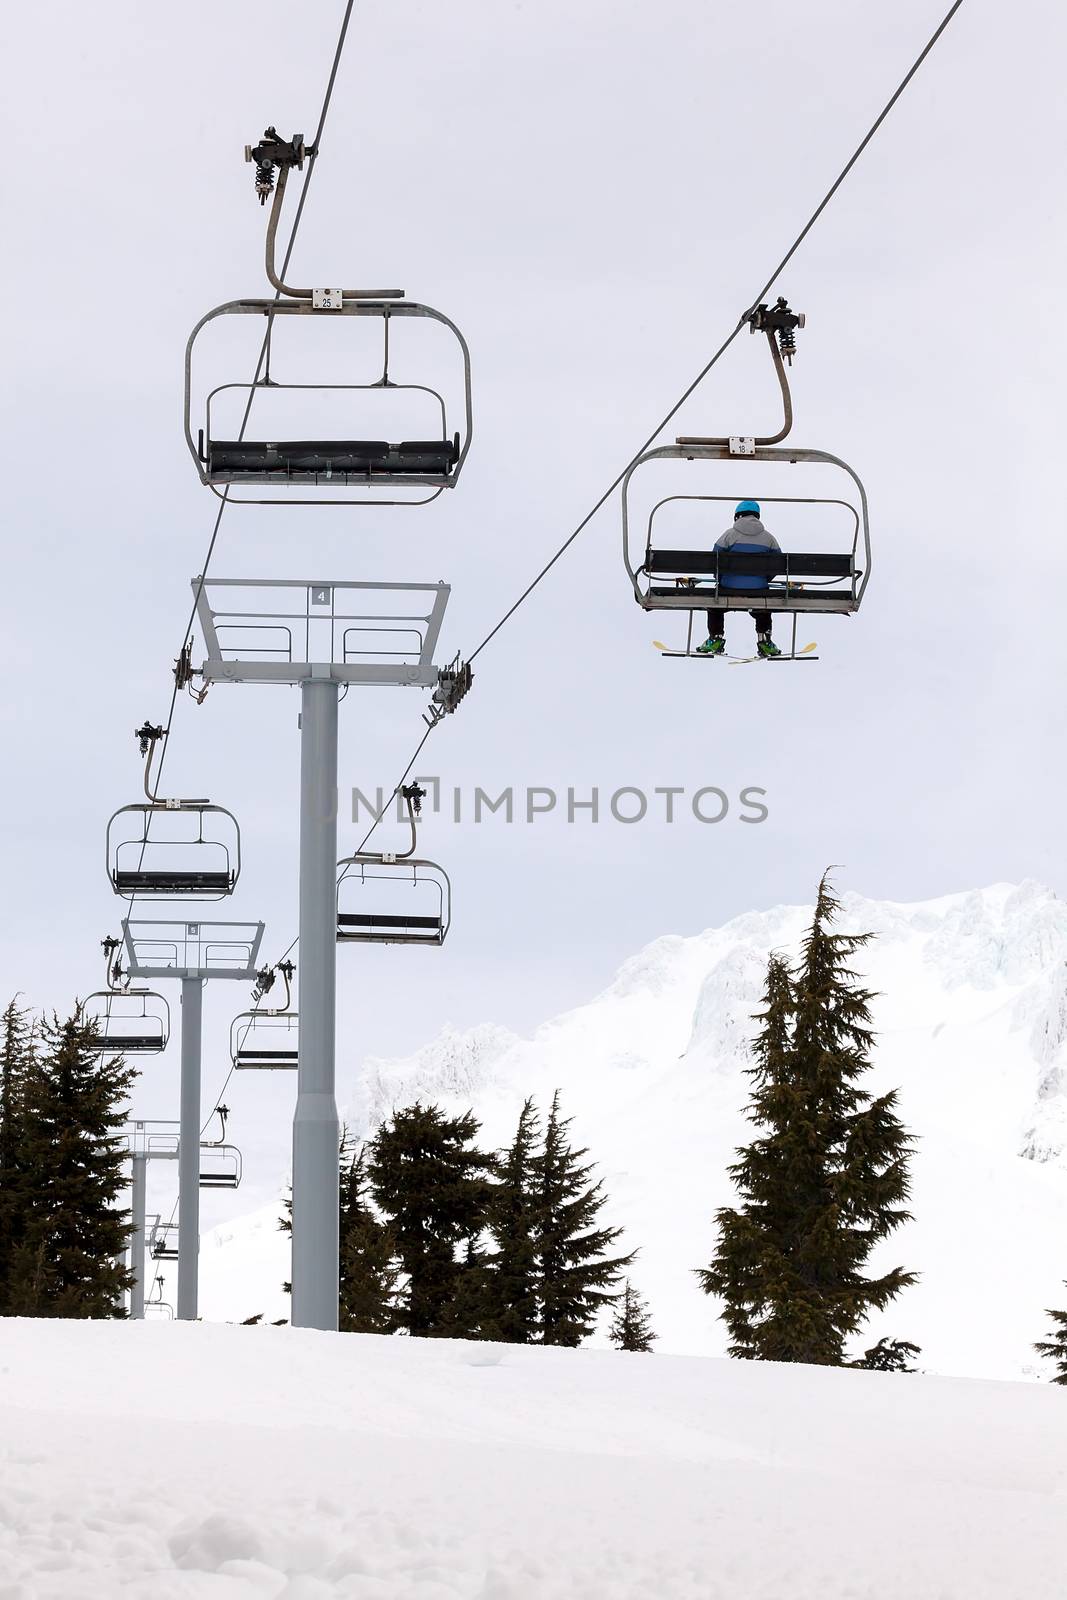 Skier Riding Ski Lifts up the slope of Mount Hood Oregon during Winter Skiing Season